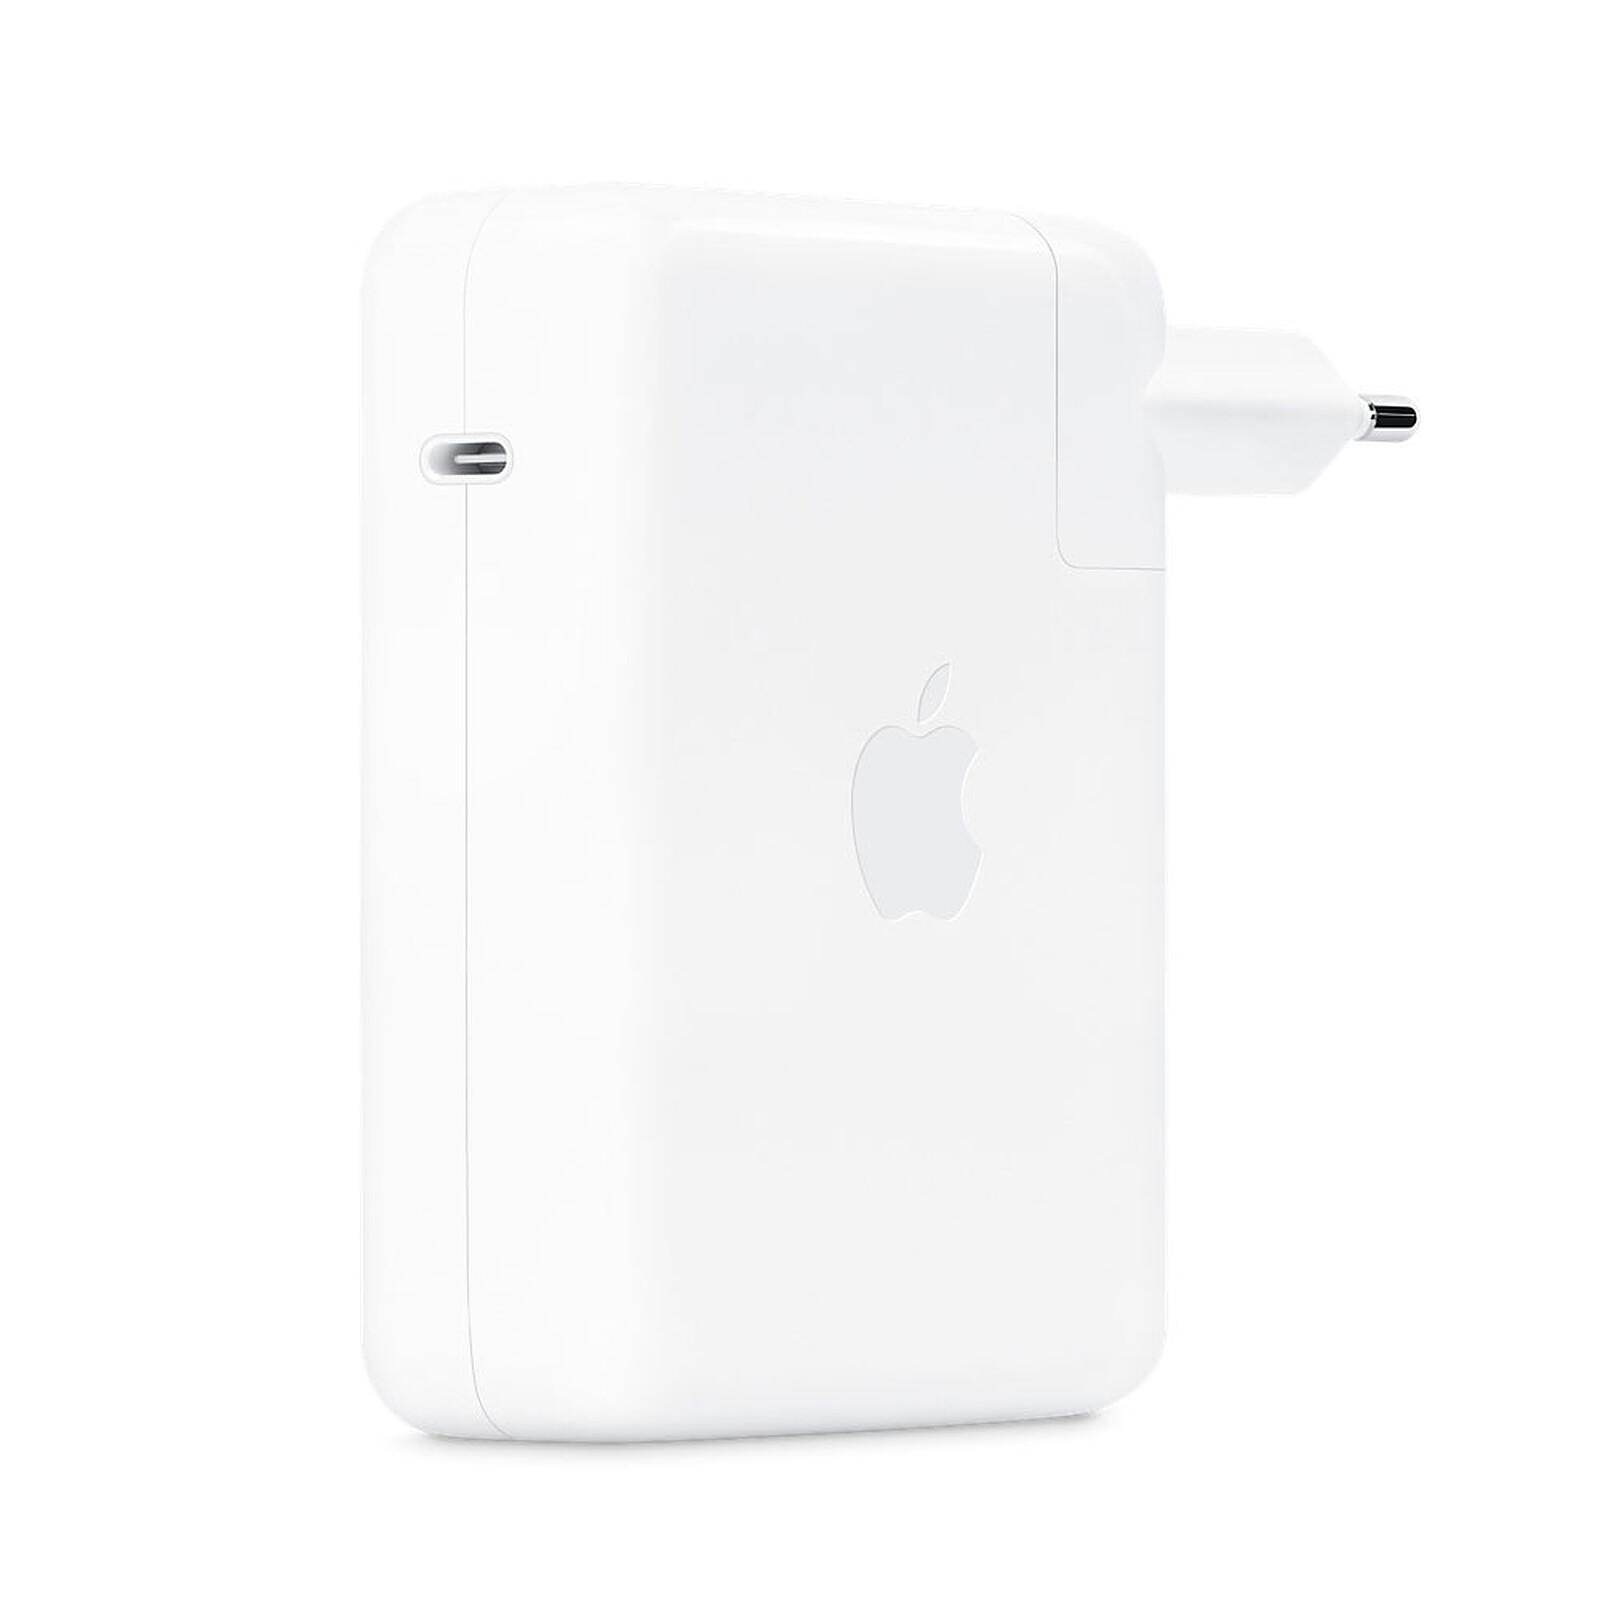 Refurb : l'Apple TV 4K Wi-Fi + Ethernet 128 Go à 159 € (-30